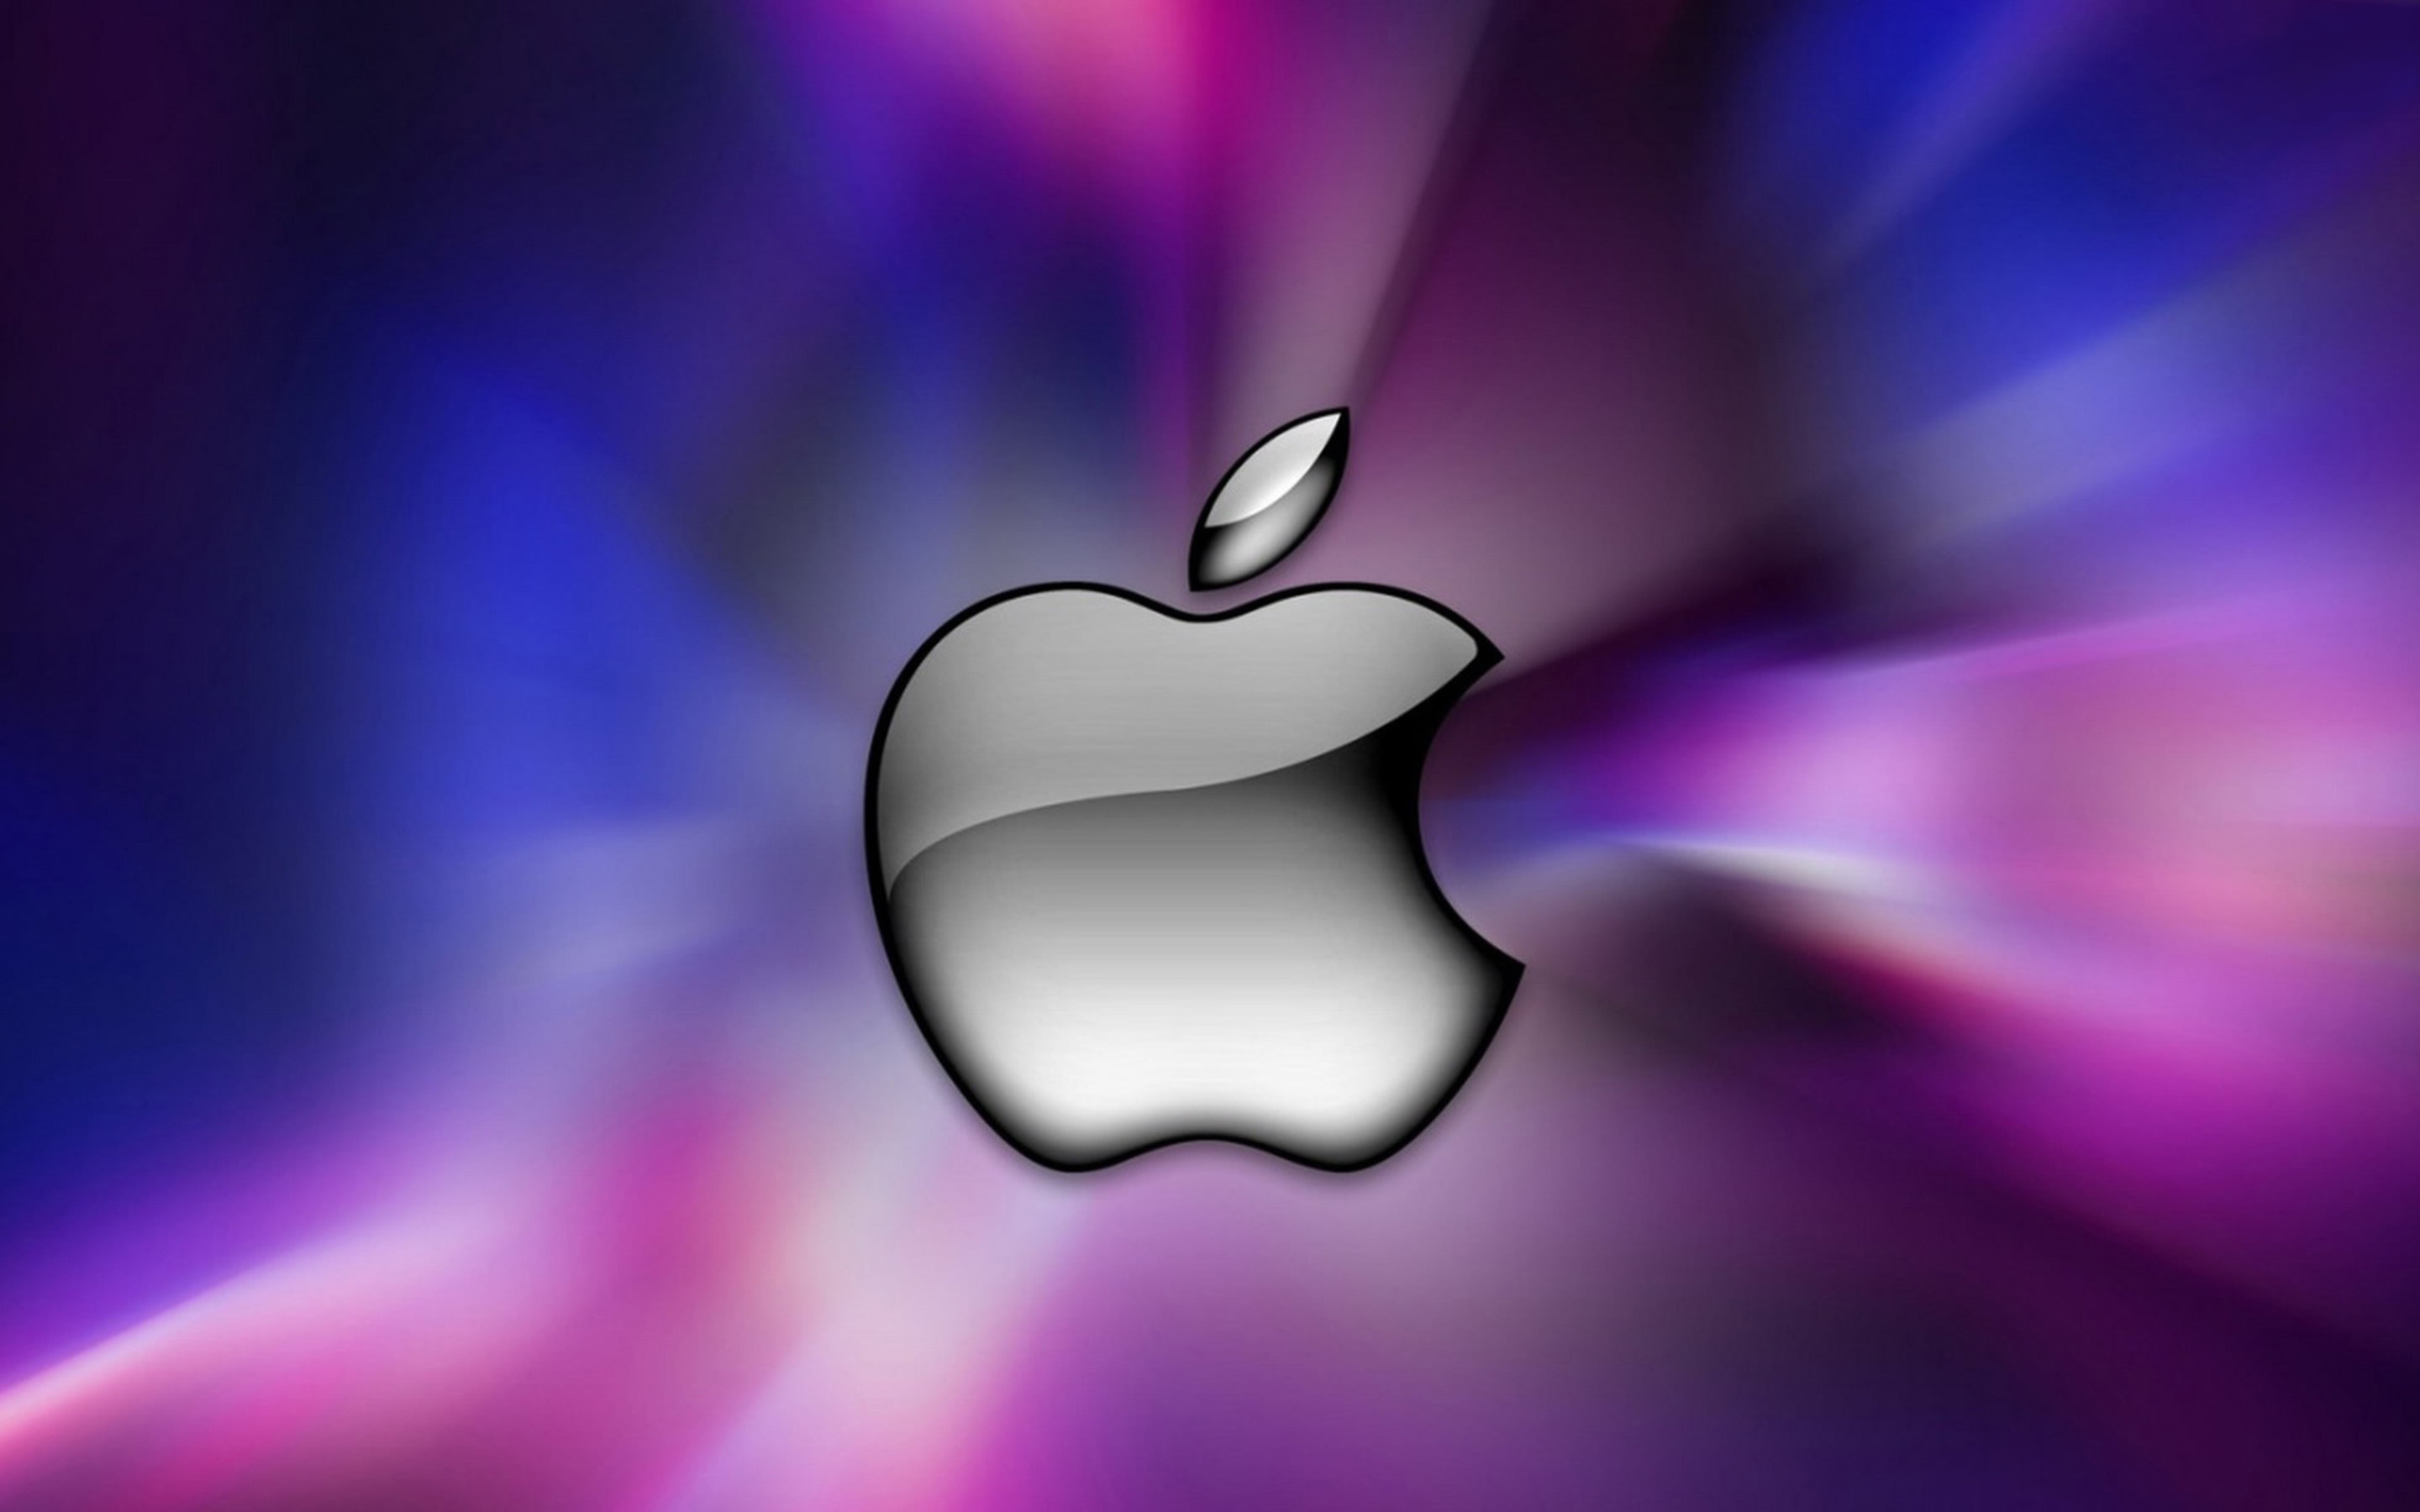 Apple Logo 1 Mac Wallpaper Download | Free Mac Wallpapers Download